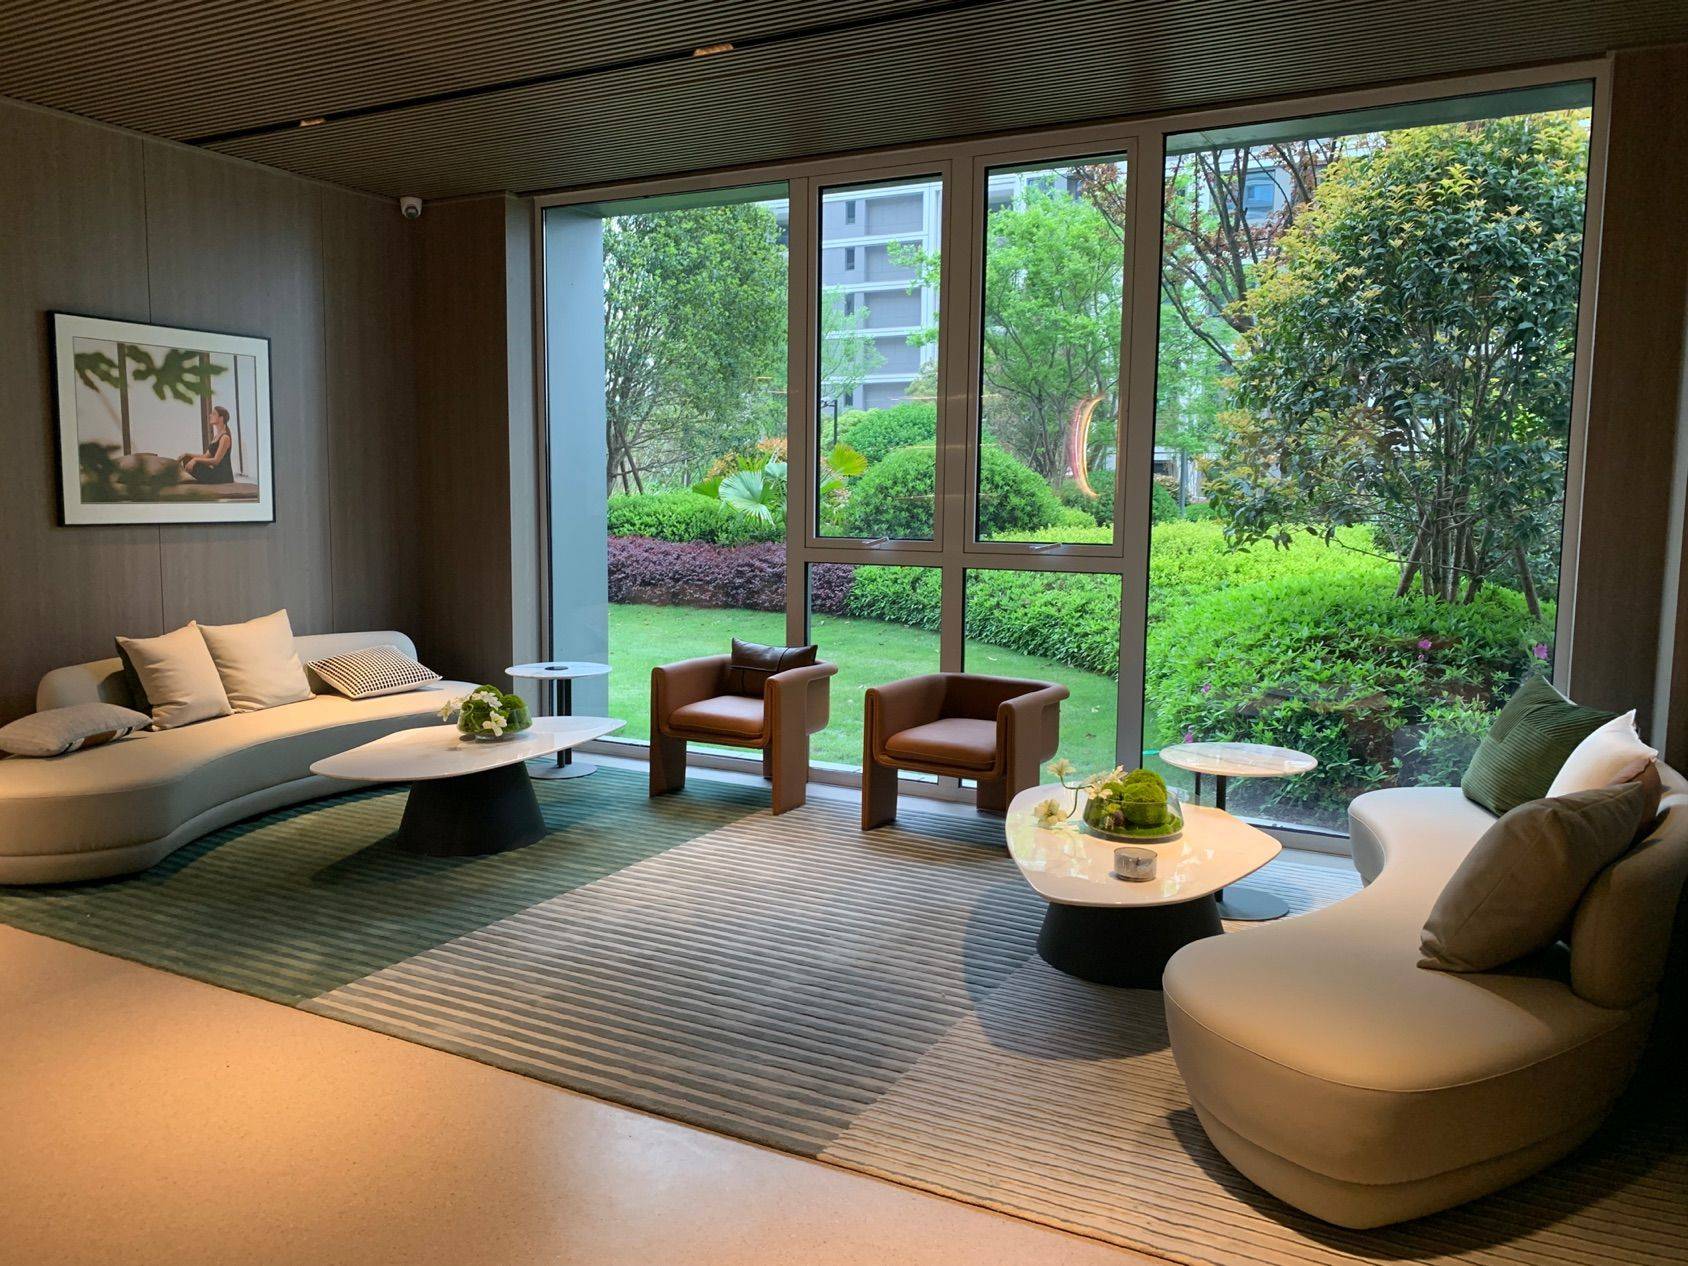 Hangzhou-Xiaoshan-Cozy Home,Clean&Comfy,No Gender Limit,“Friends”,Chilled,LGBTQ Friendly